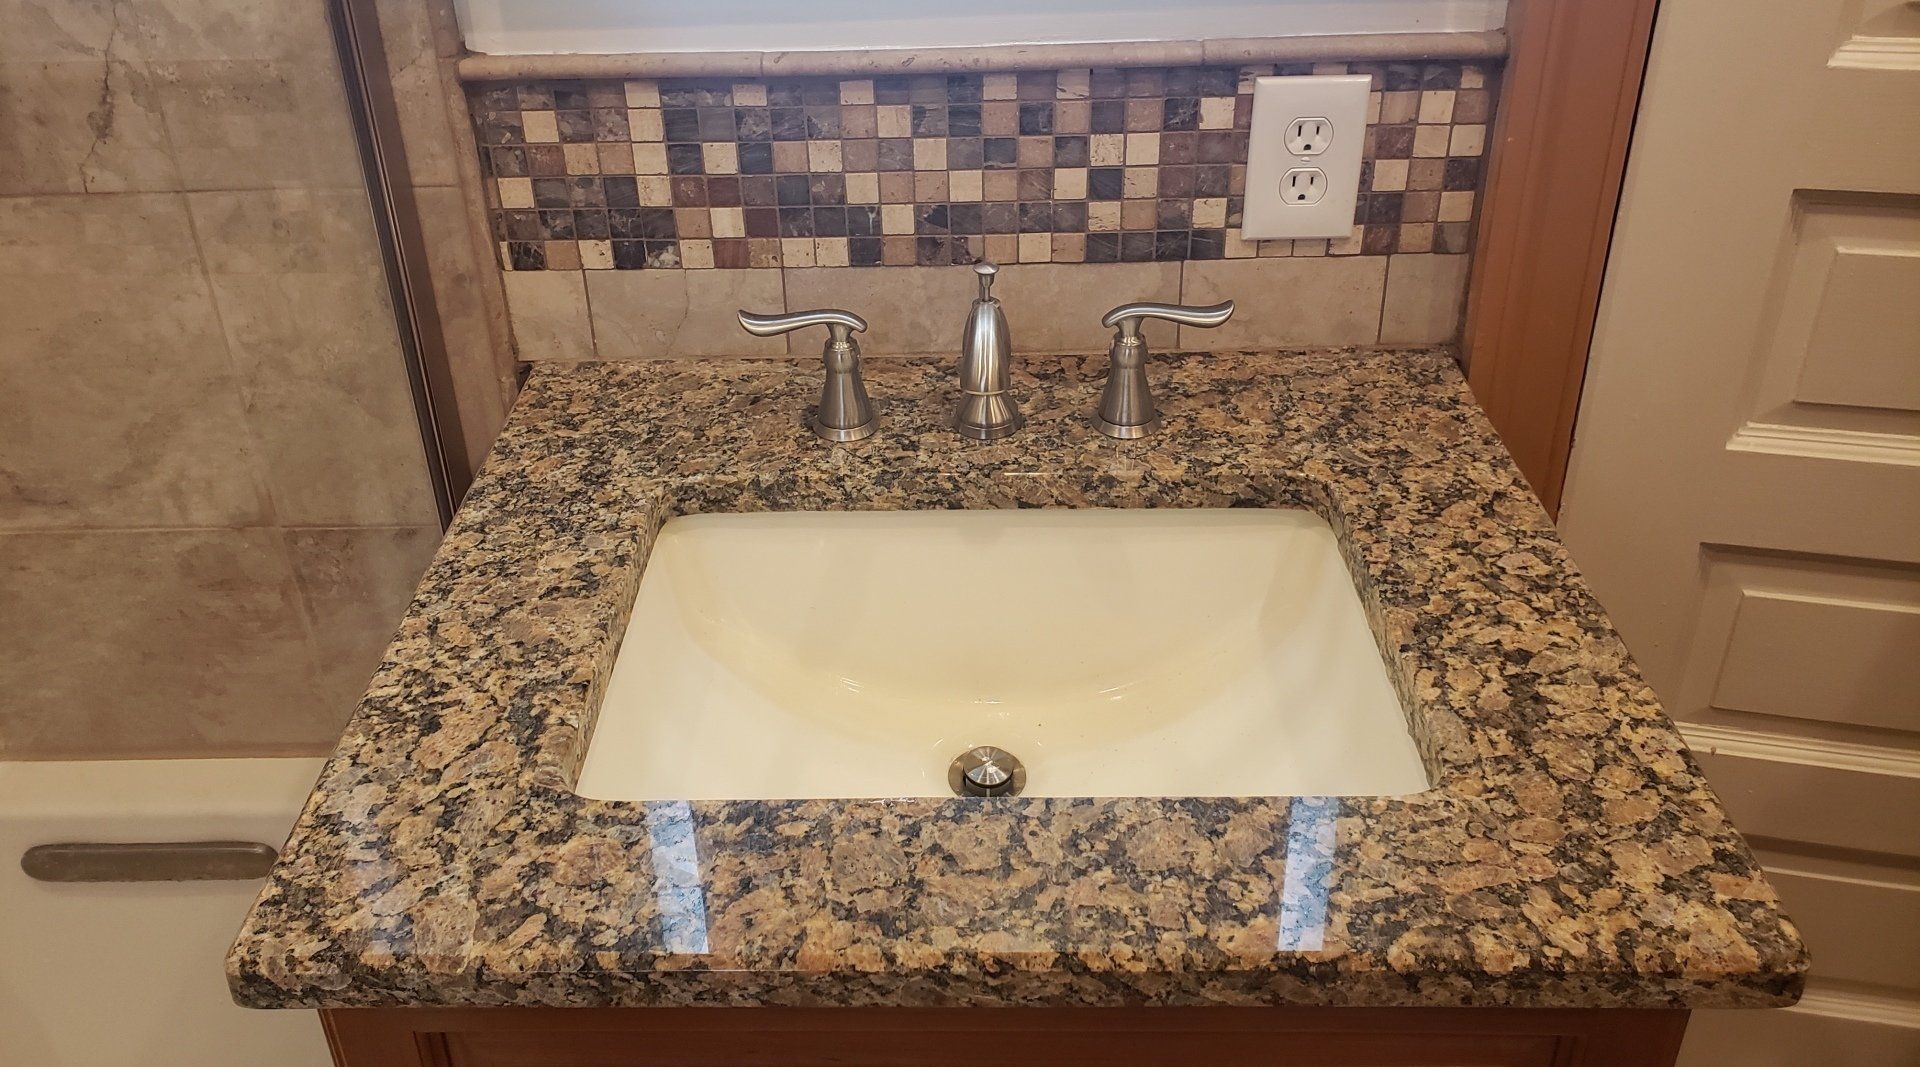 Sink with granite countertop and mosaic tile backsplash in Cheltenham bathroom remodel.